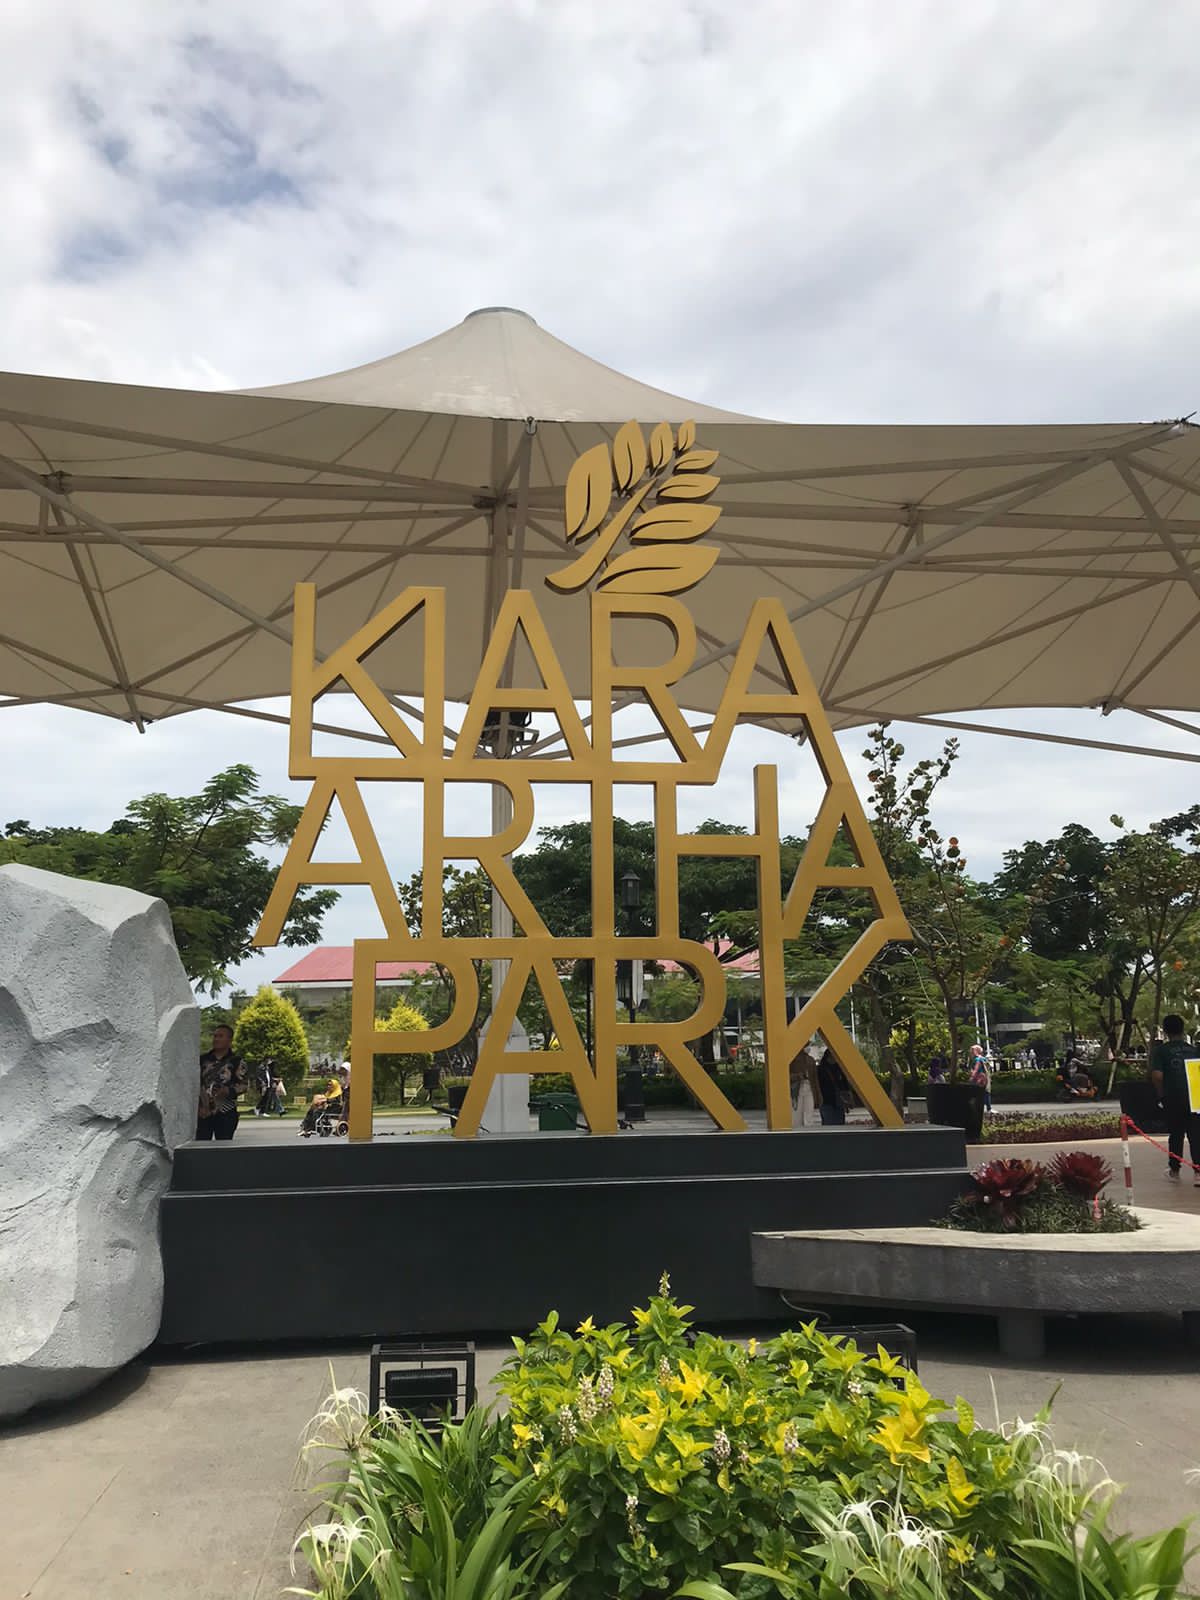 UNIK: Wisata Kiara Artha Park merupakan taman kota moderen dengan kampung budaya Korea. (FAHMINAH/JABAR EKSPRES)